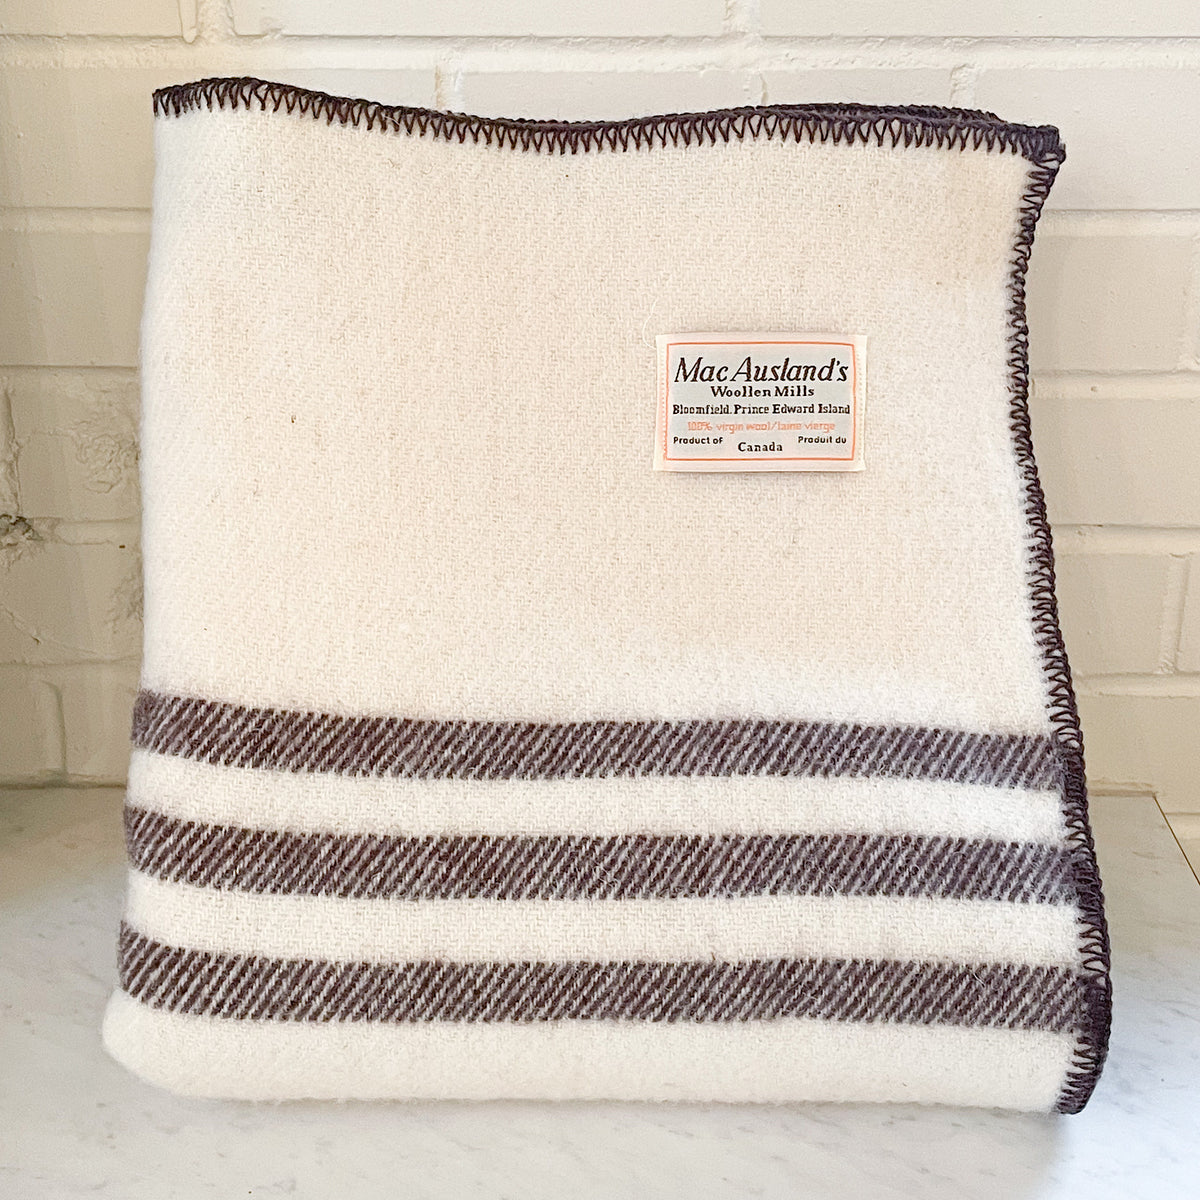 MacAusland White Lap Blanket, Chocolate Brown Stripes